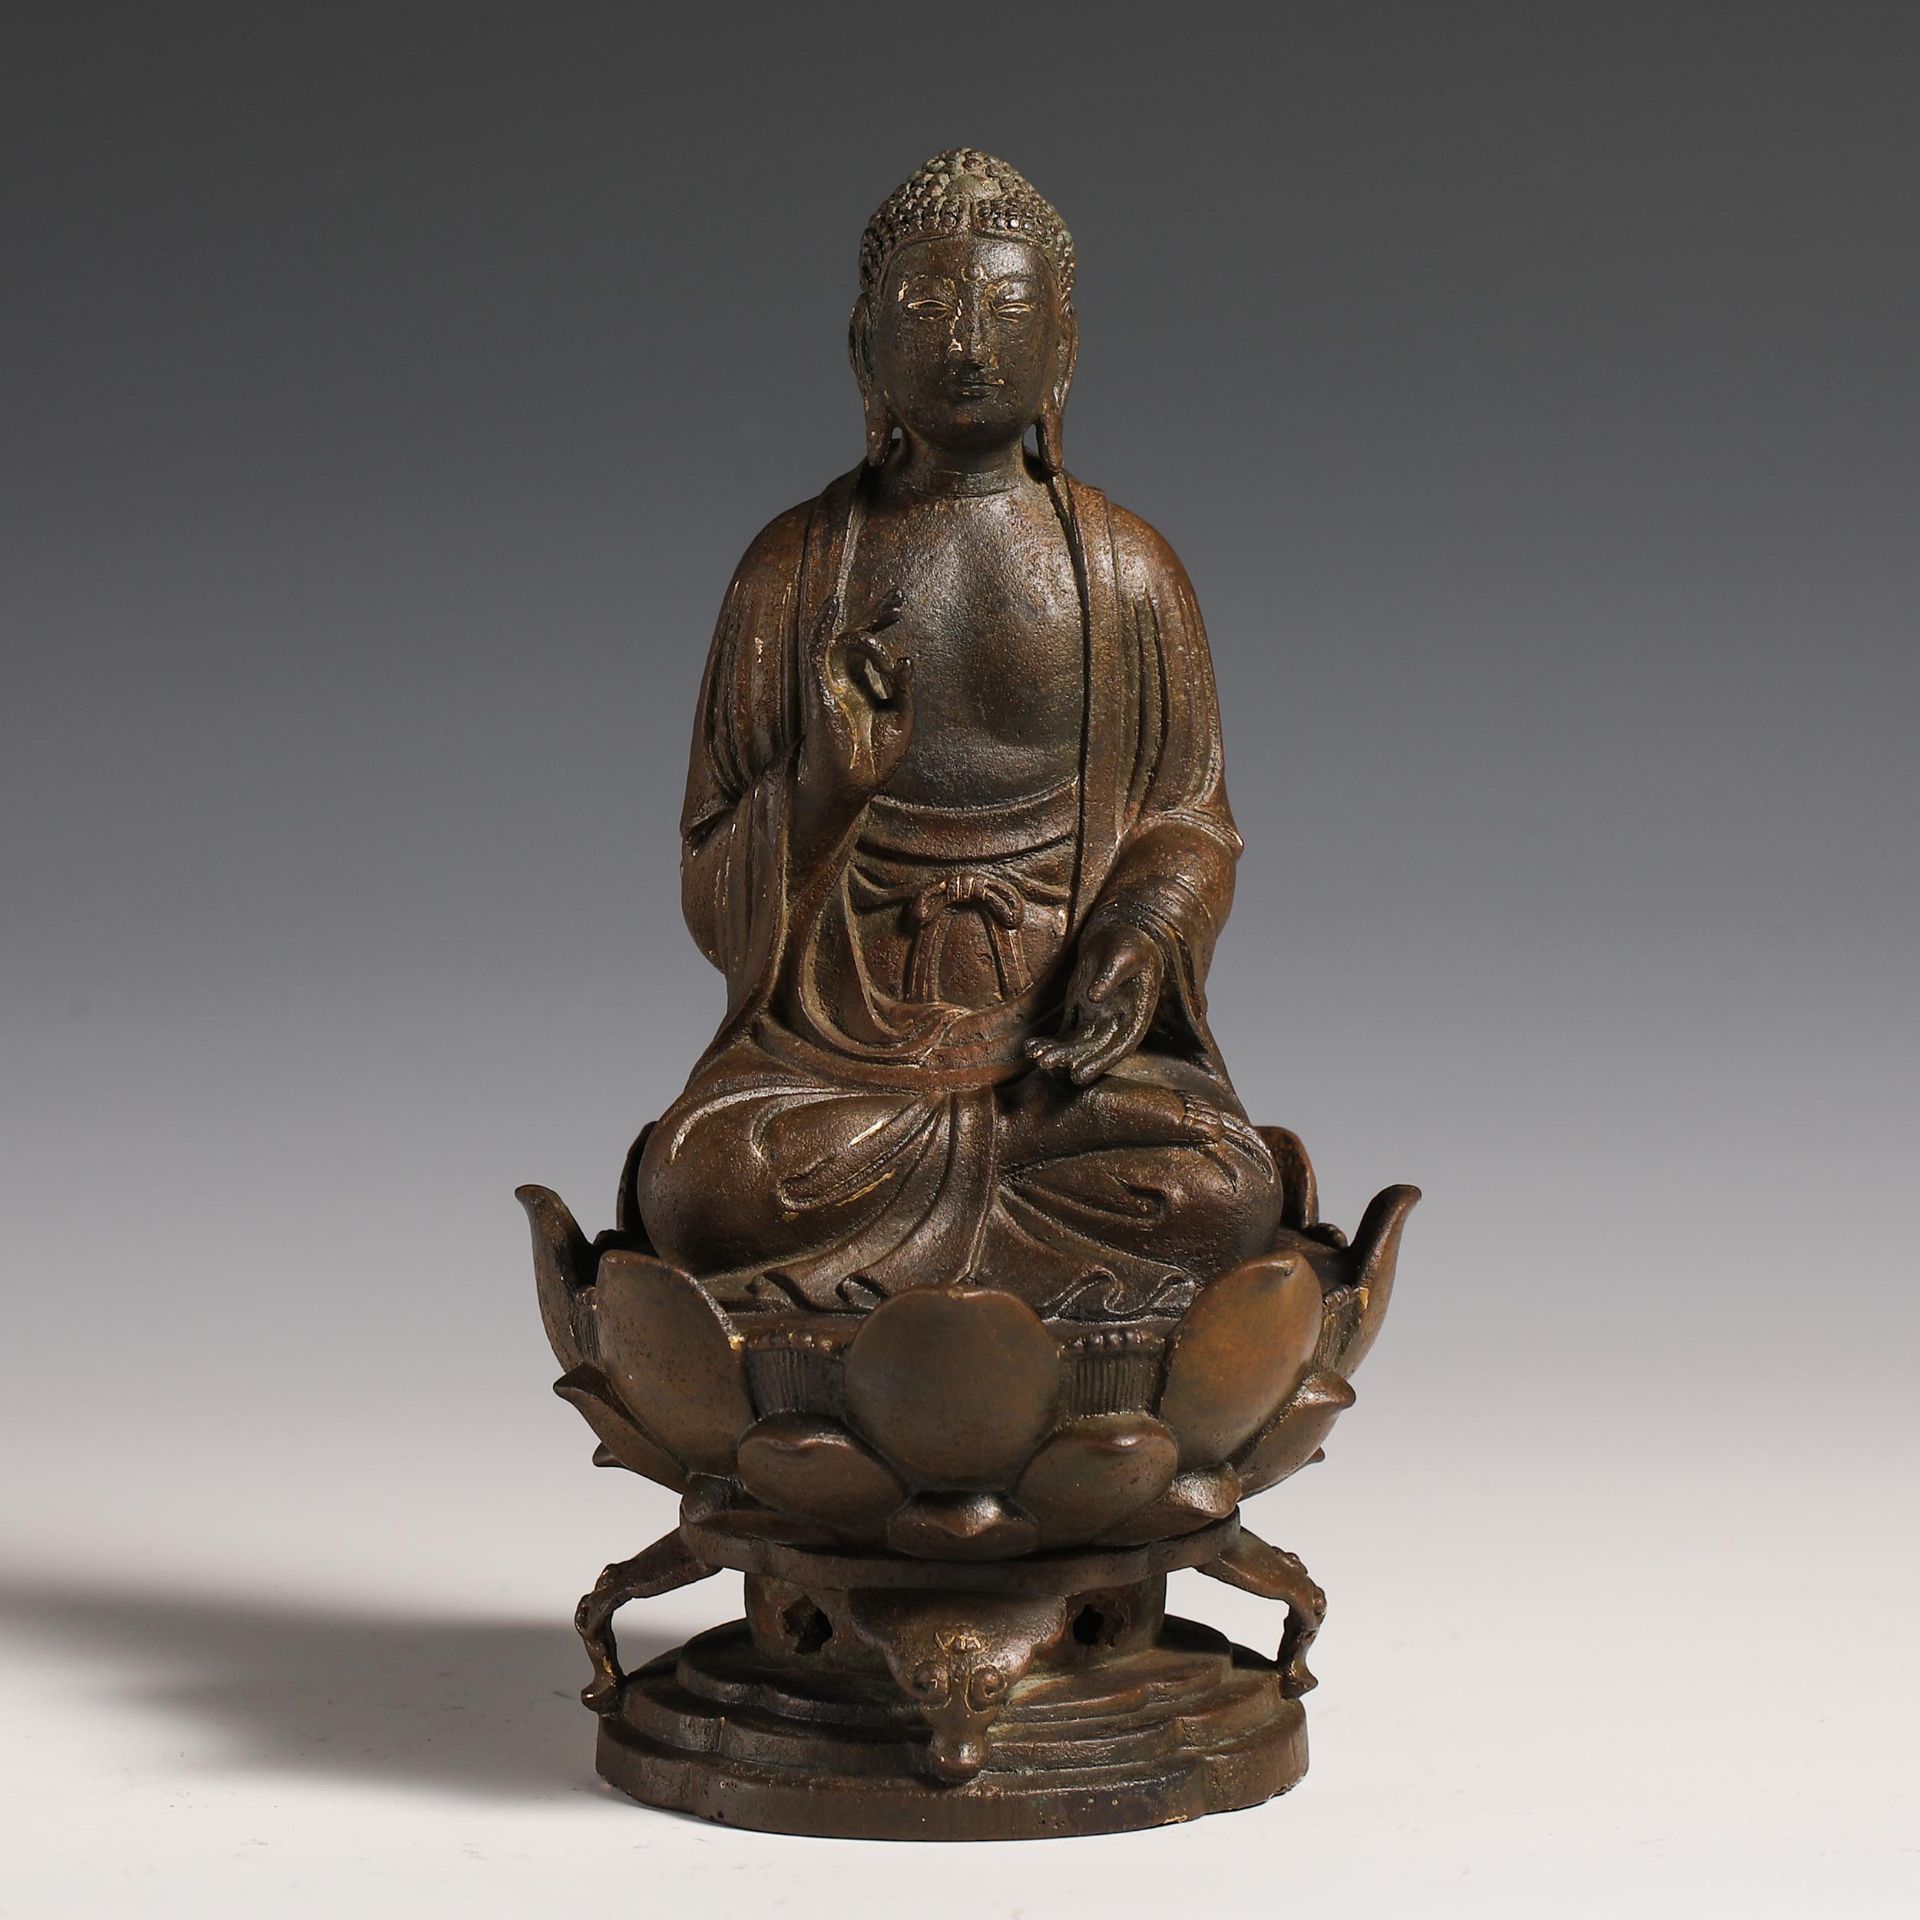 Liao Dynasty Buddha statue